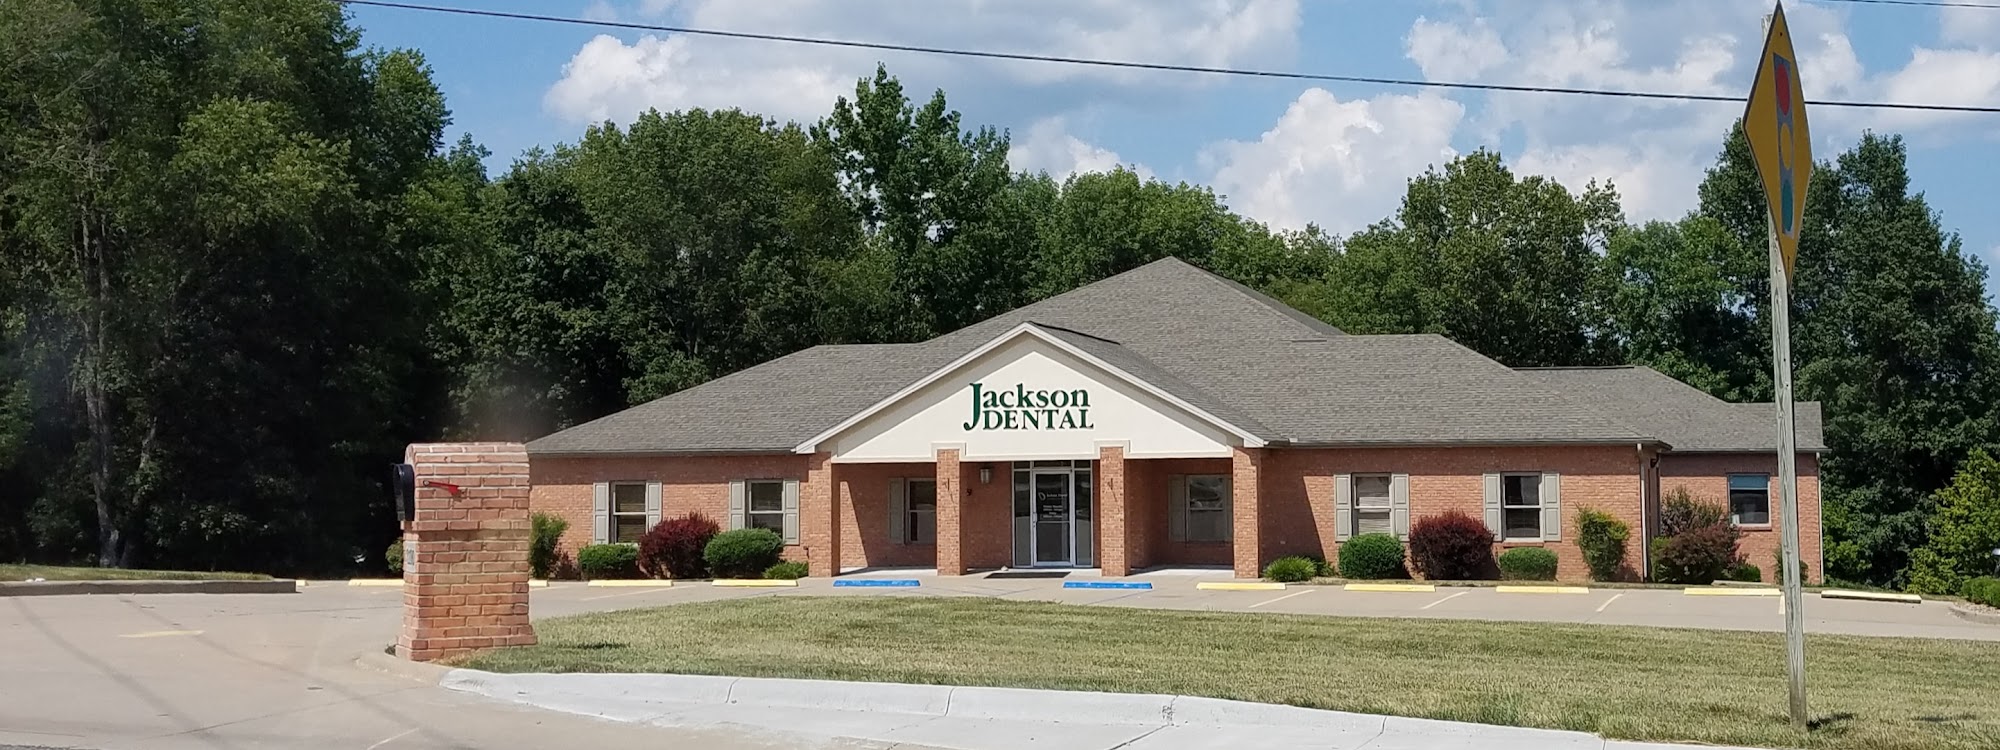 Jackson Dental 3100 E Jackson Blvd, Jackson Missouri 63755